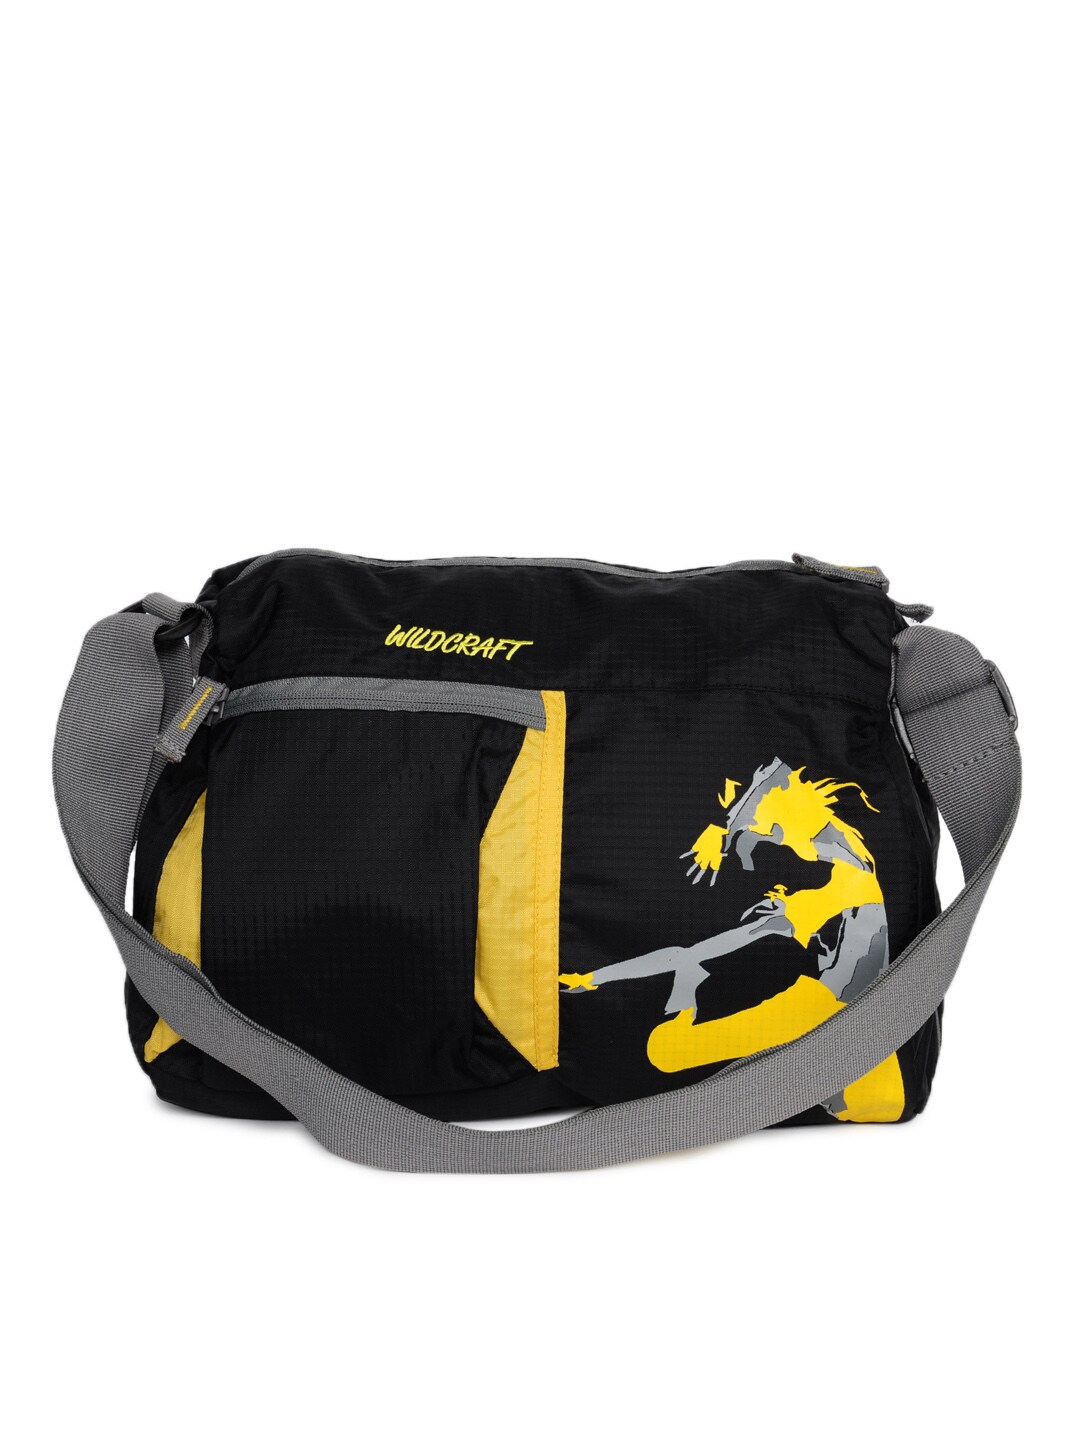 Wildcraft Unisex Graffiti Black & Yellow Sling Bag